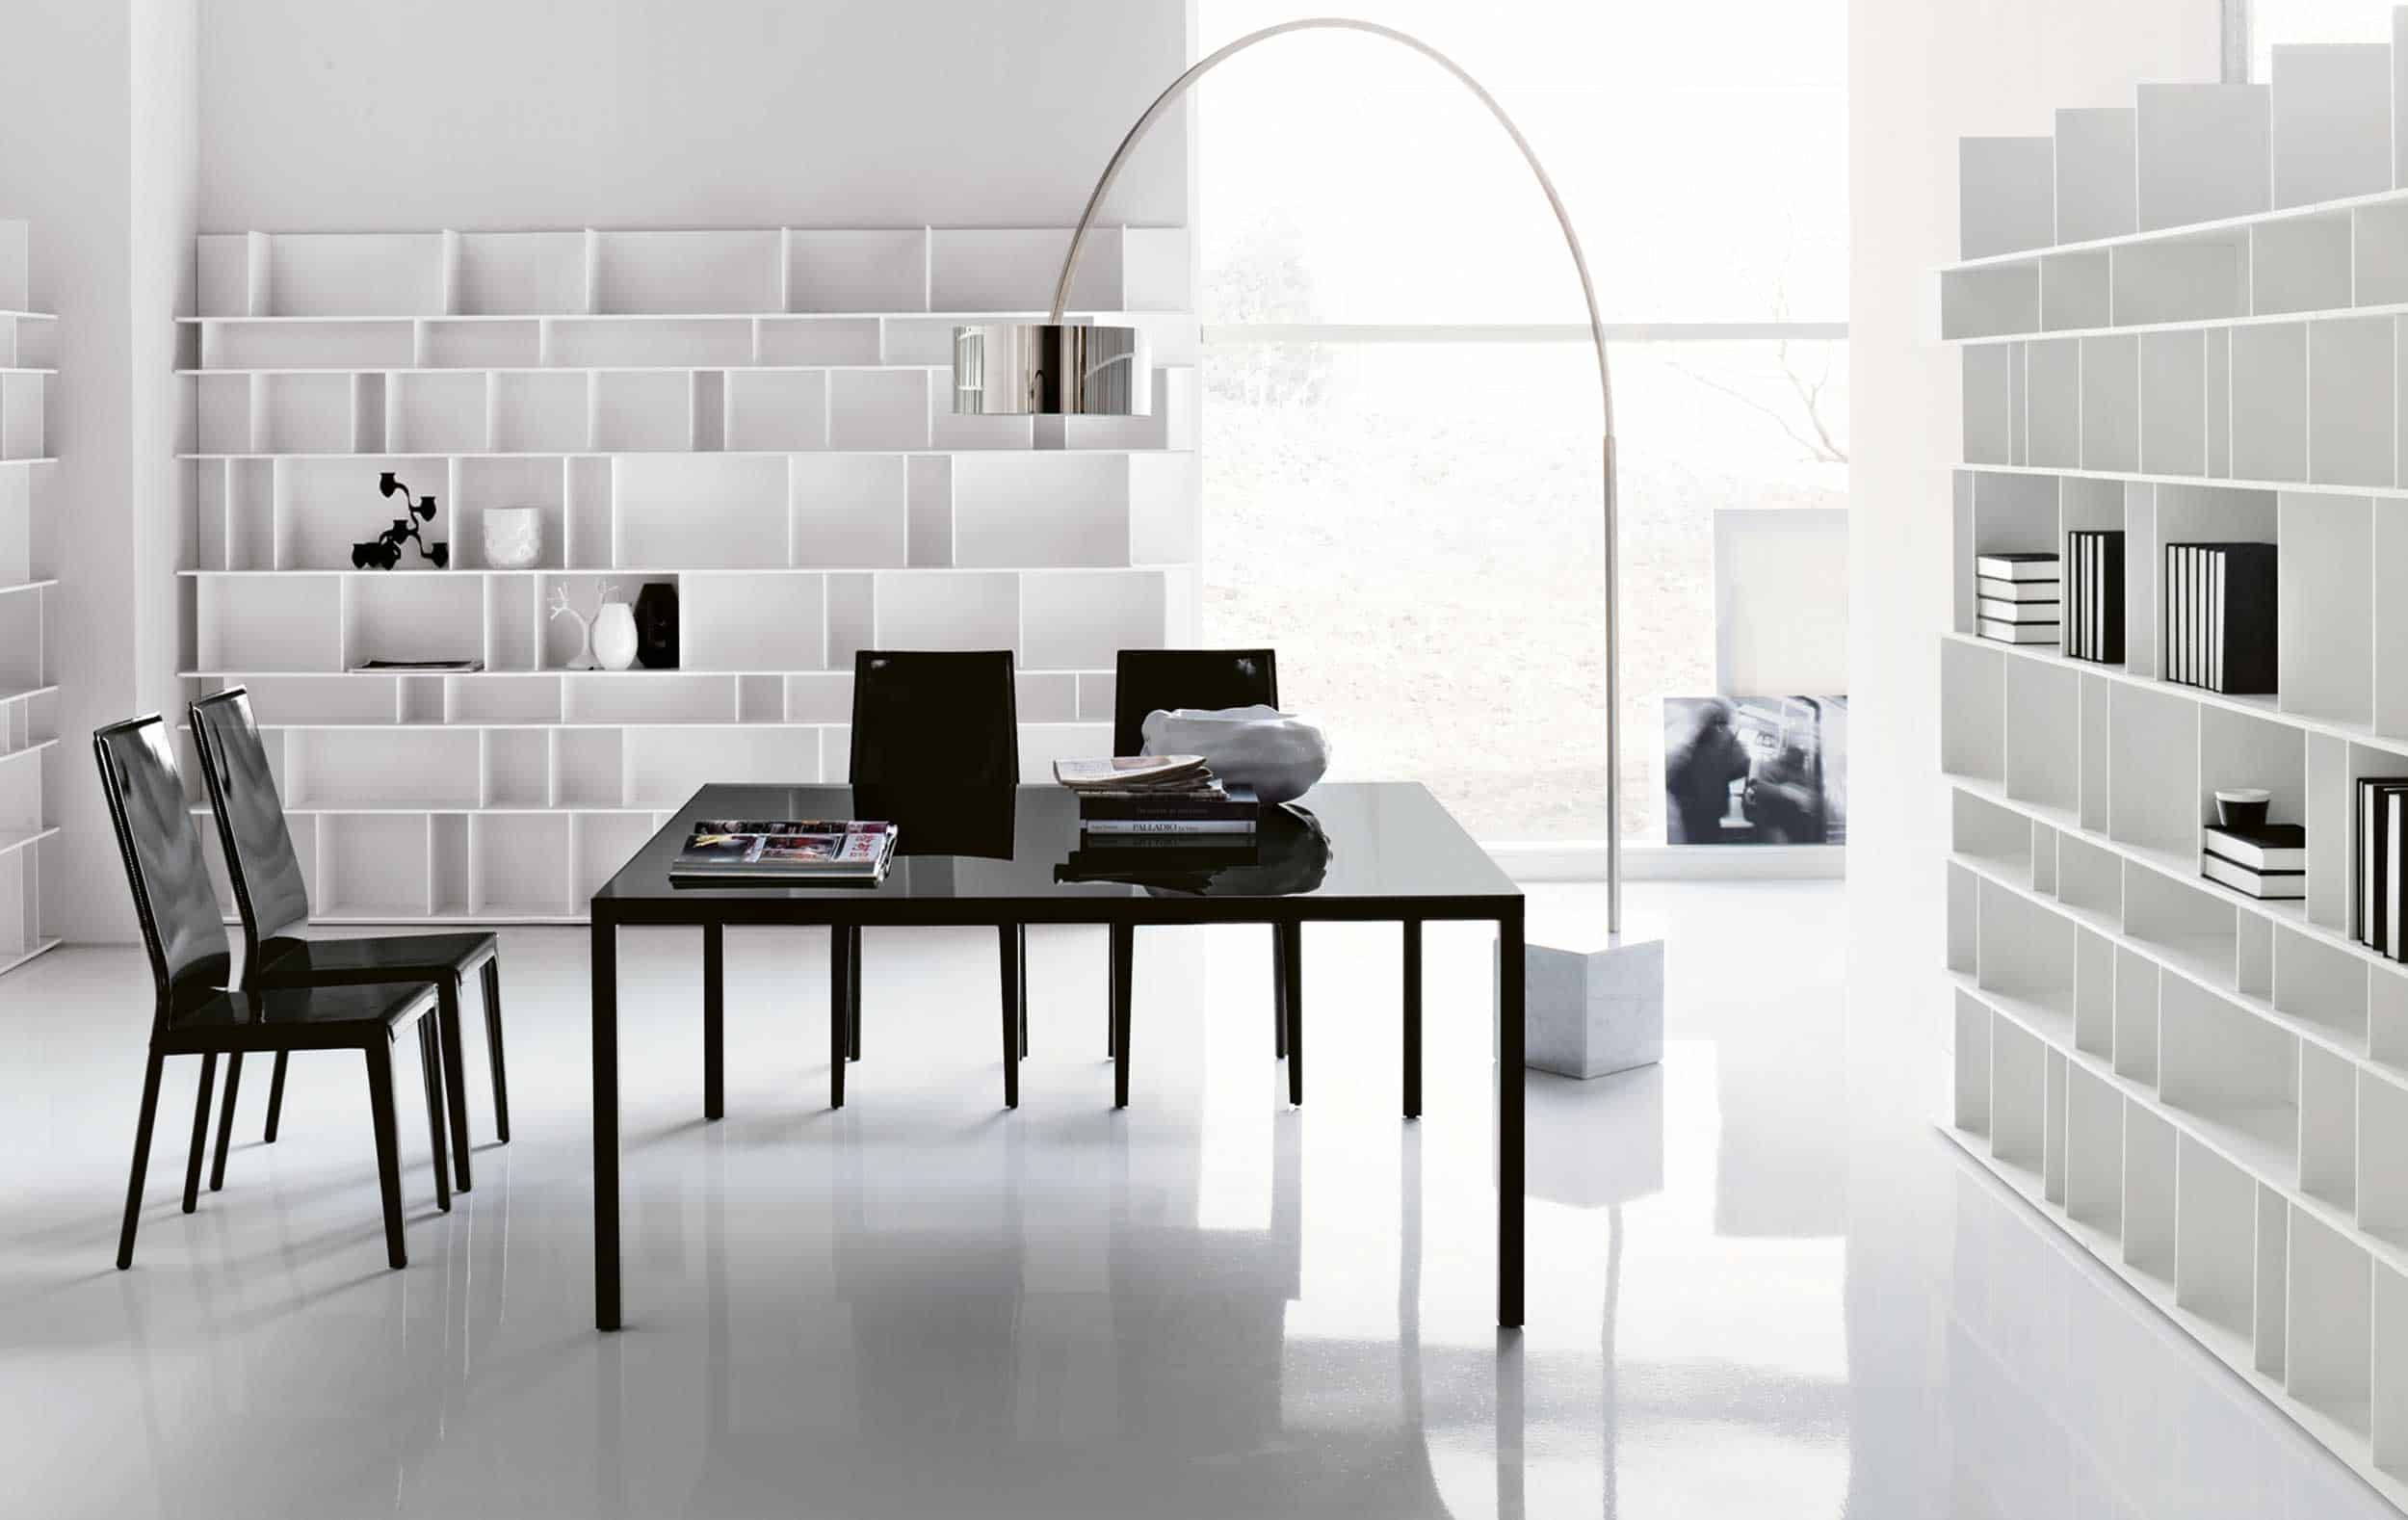 design-home-office-contemporary-desk-furniture-great-offices-idea-for-architect-desk-architecture-websites-bedroom-decor-online-interior-magazine-home-decorating-ideas